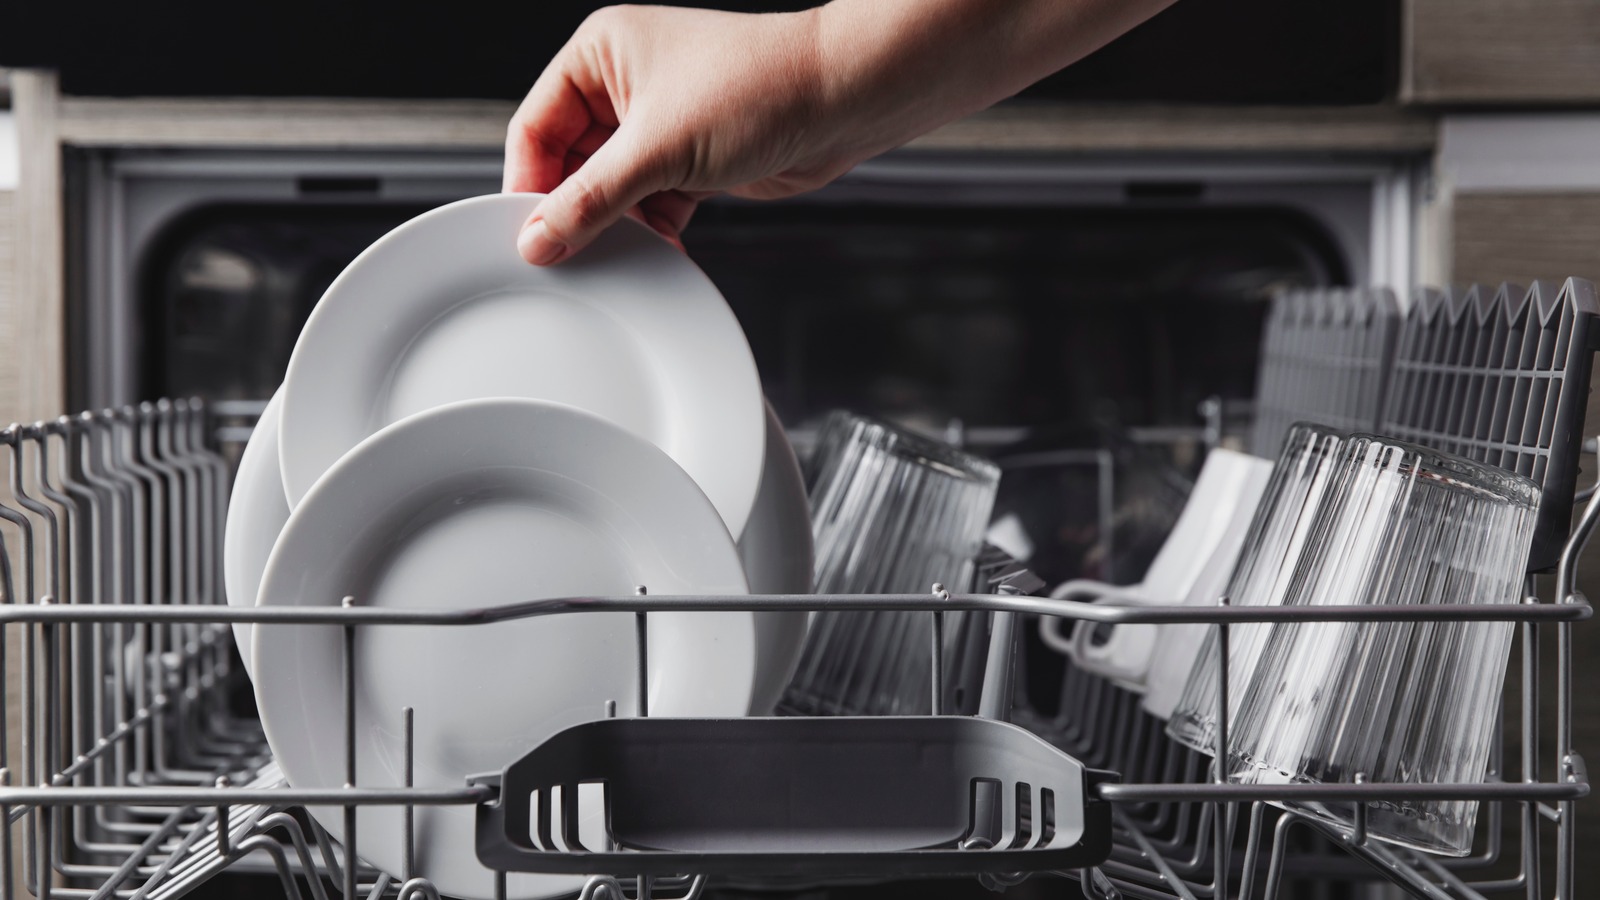 Why Are My Dishwasher Pods Not Dissolving? - Bob Vila